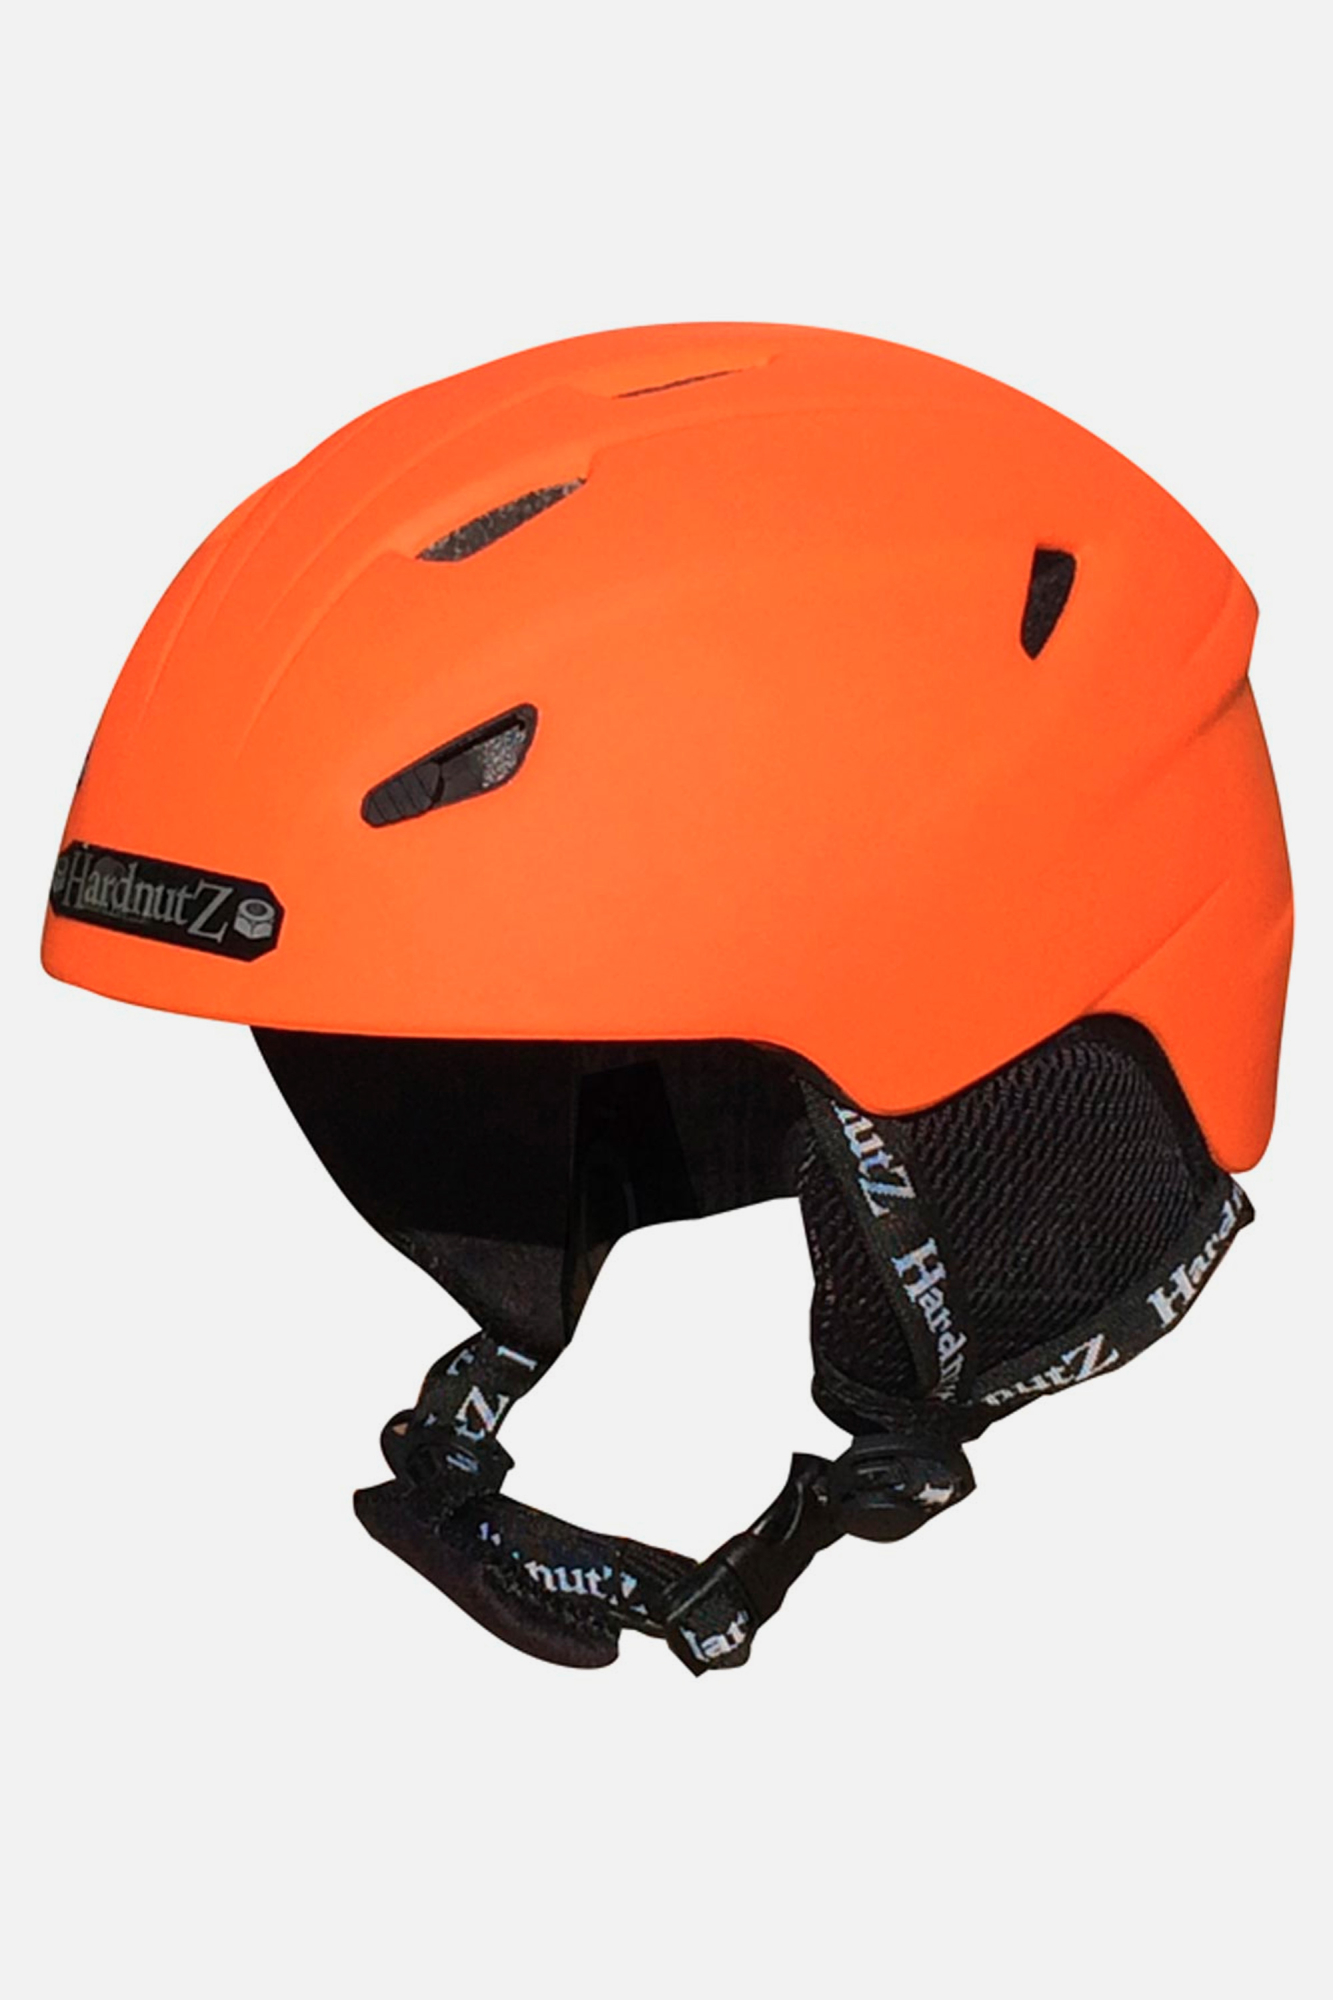 Hardnutz Rubber In Mould Helmet Orange - Size: Medium